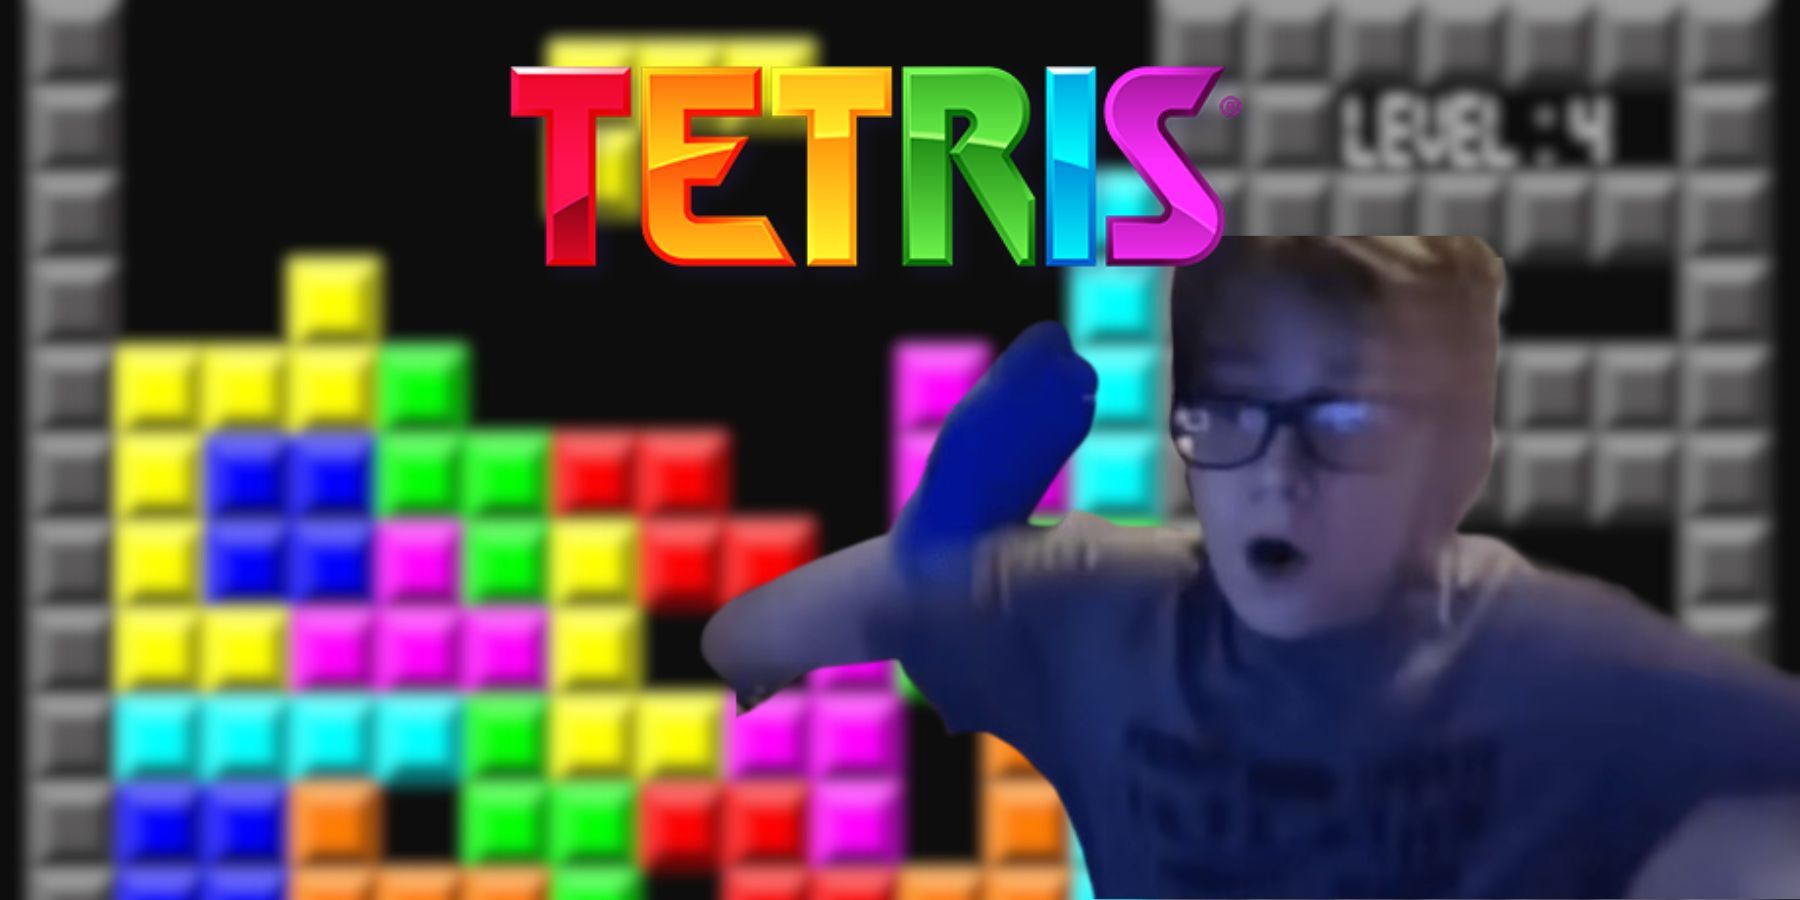 A Tetris image with player Blue Scuti